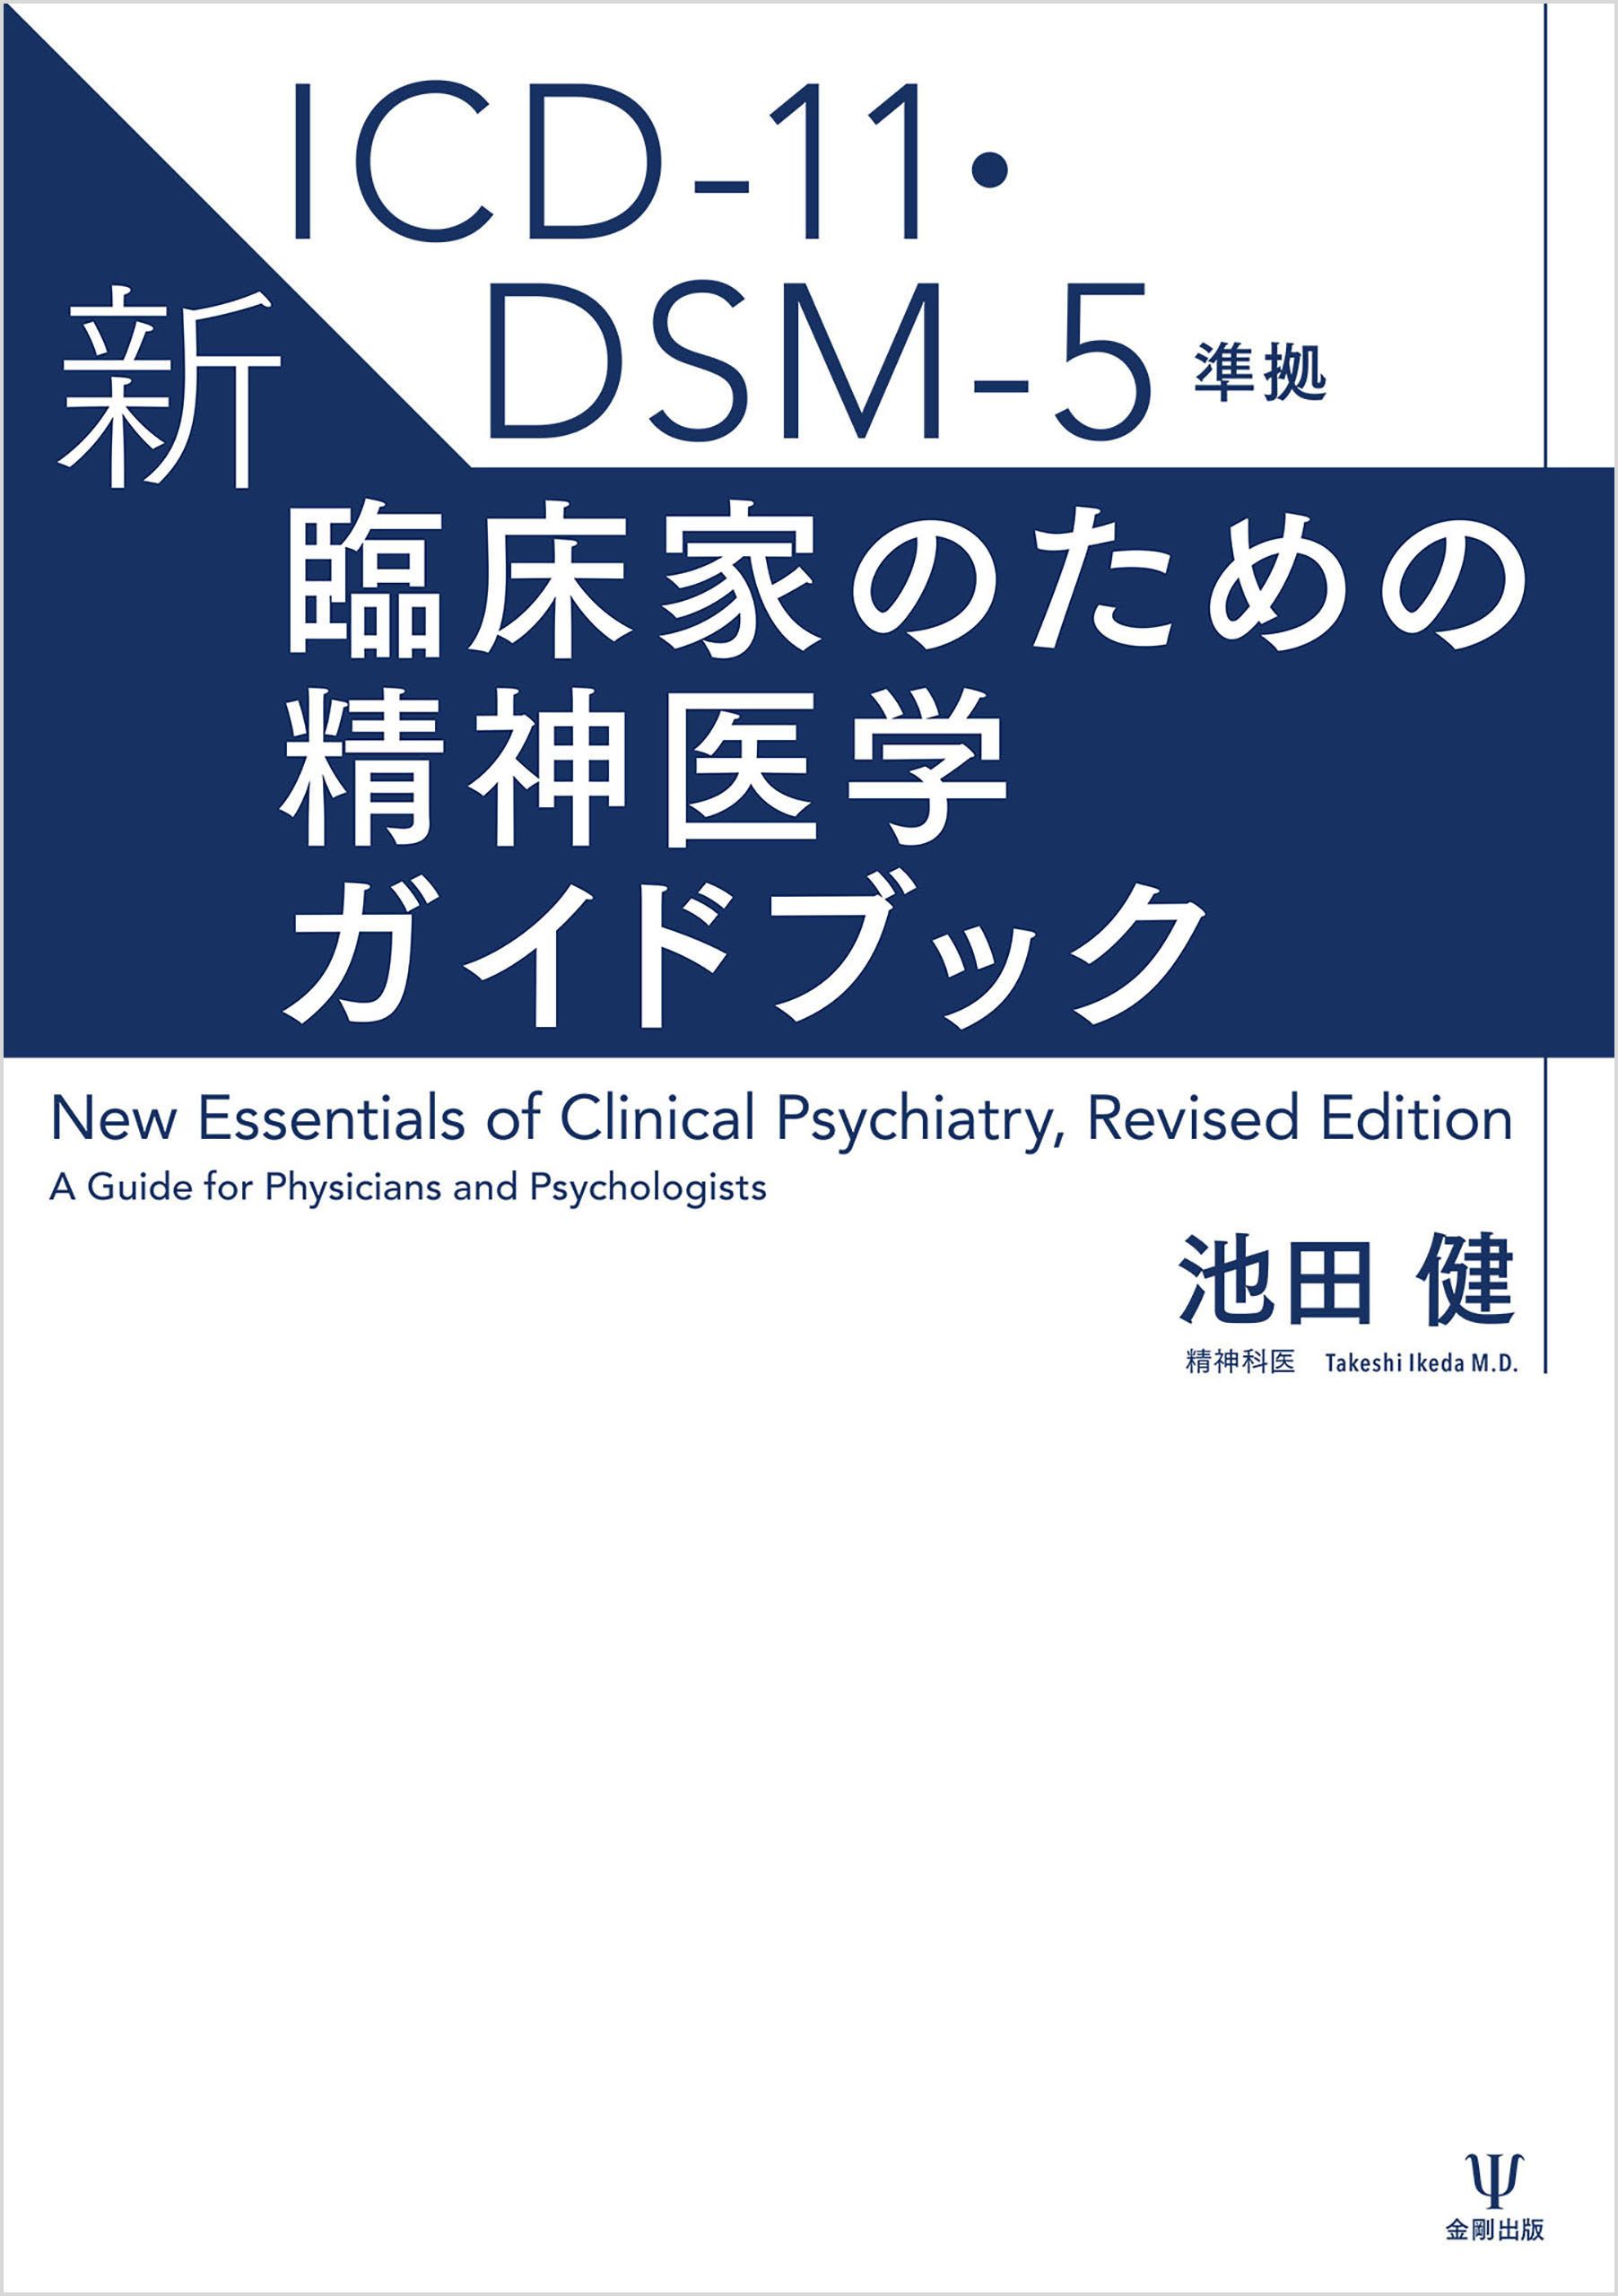 ICD-11・DSM-5準拠 新・臨床家のための精神医学ガイドブック - 池田健 